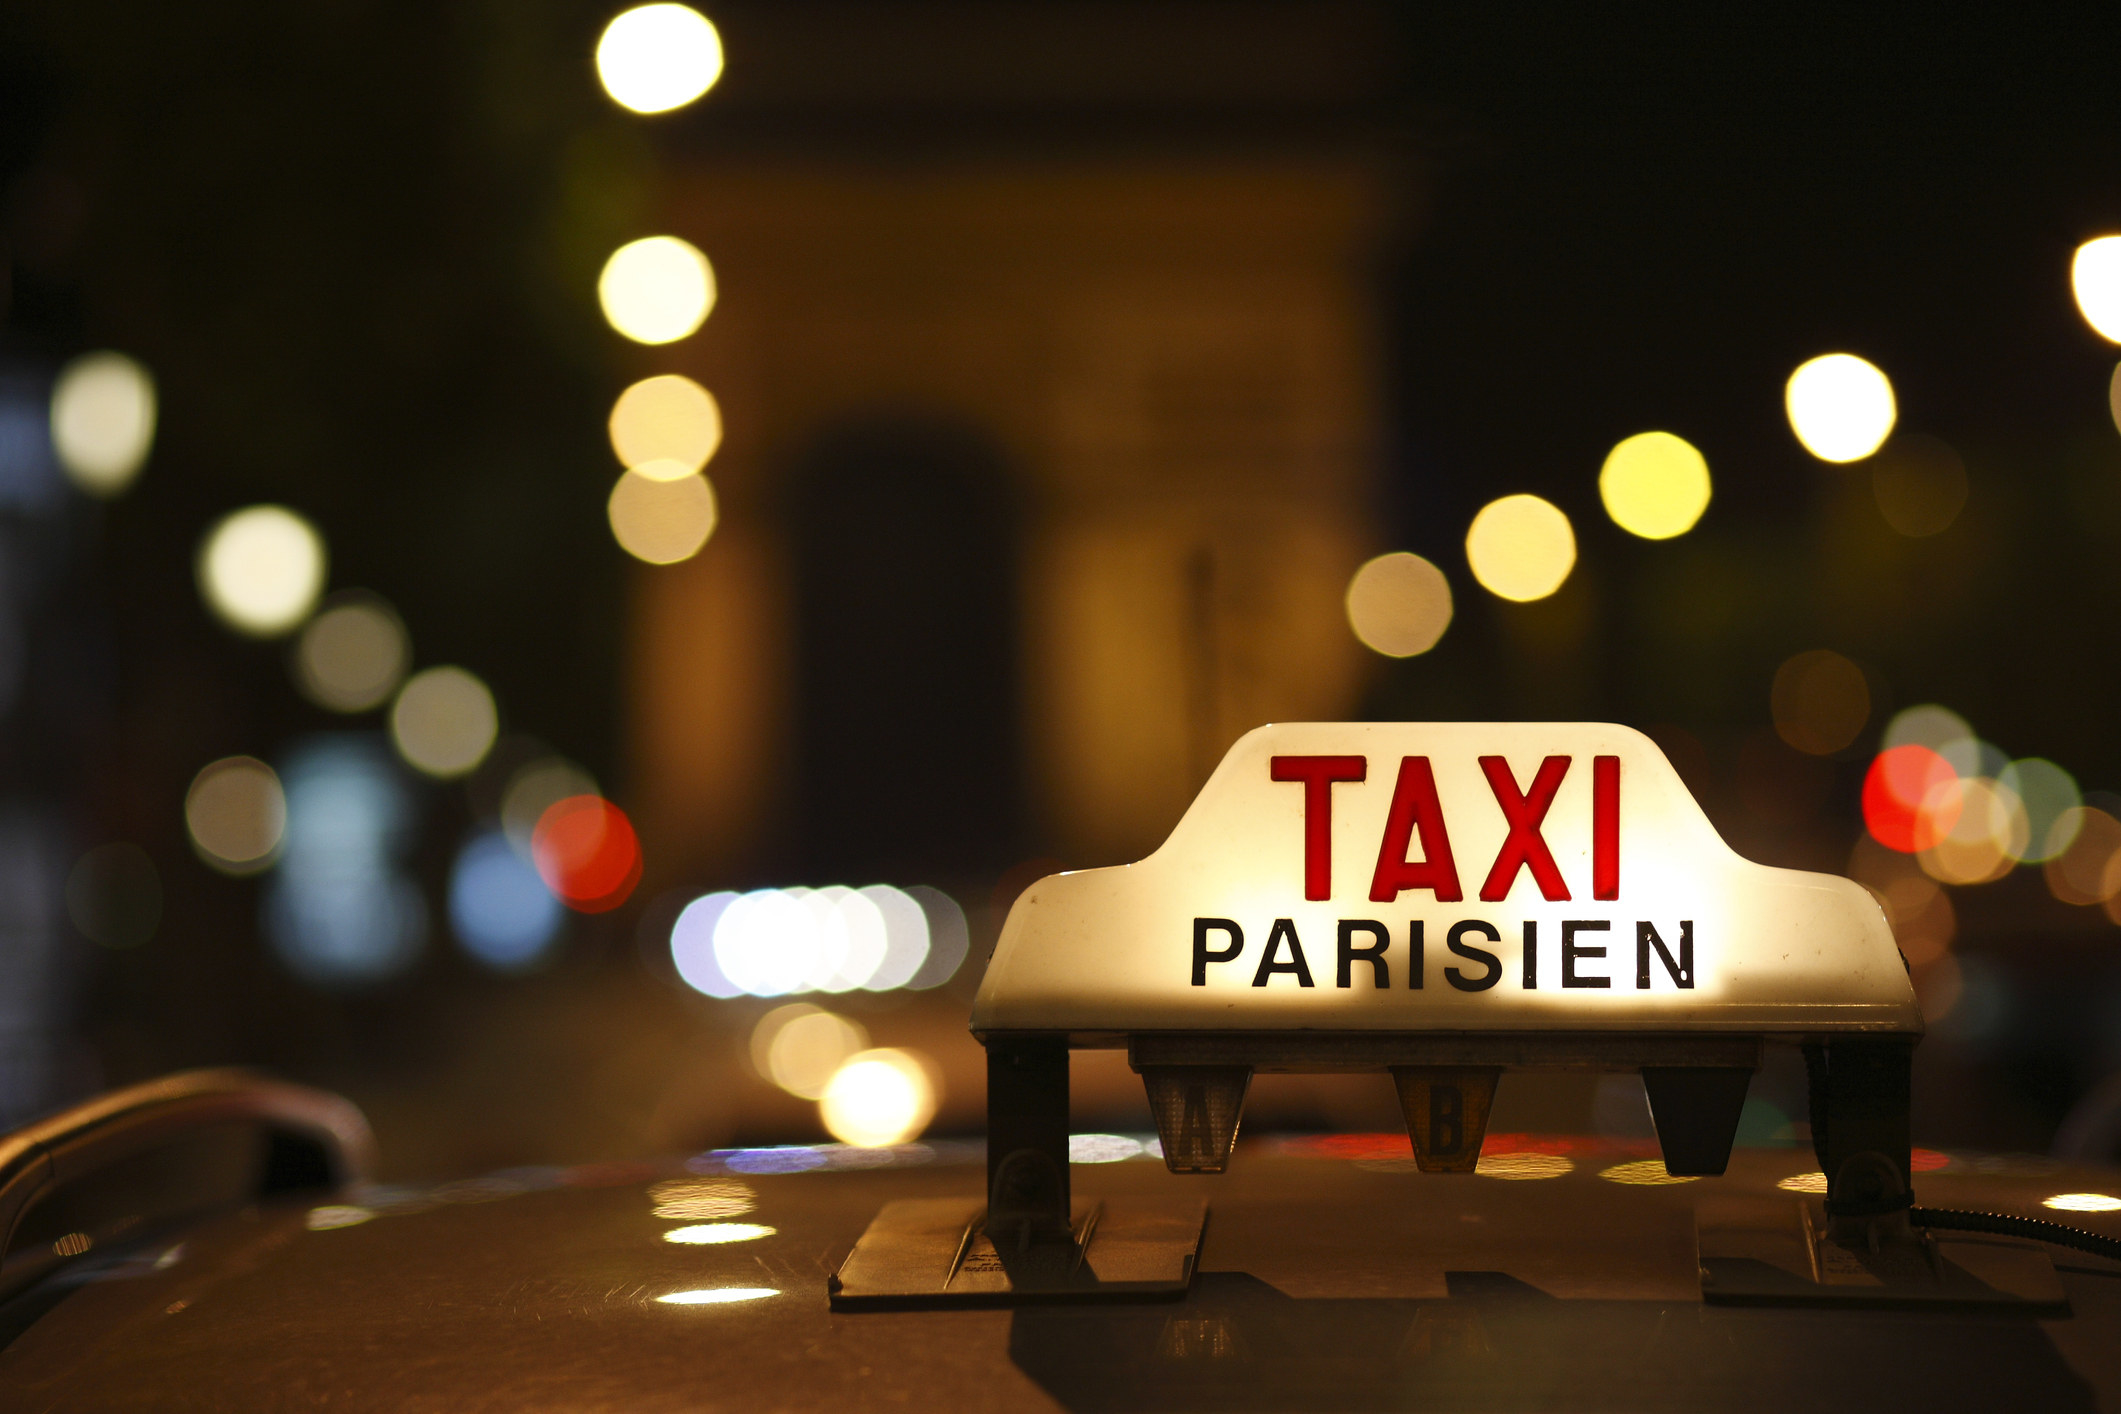 A Parisian taxi.